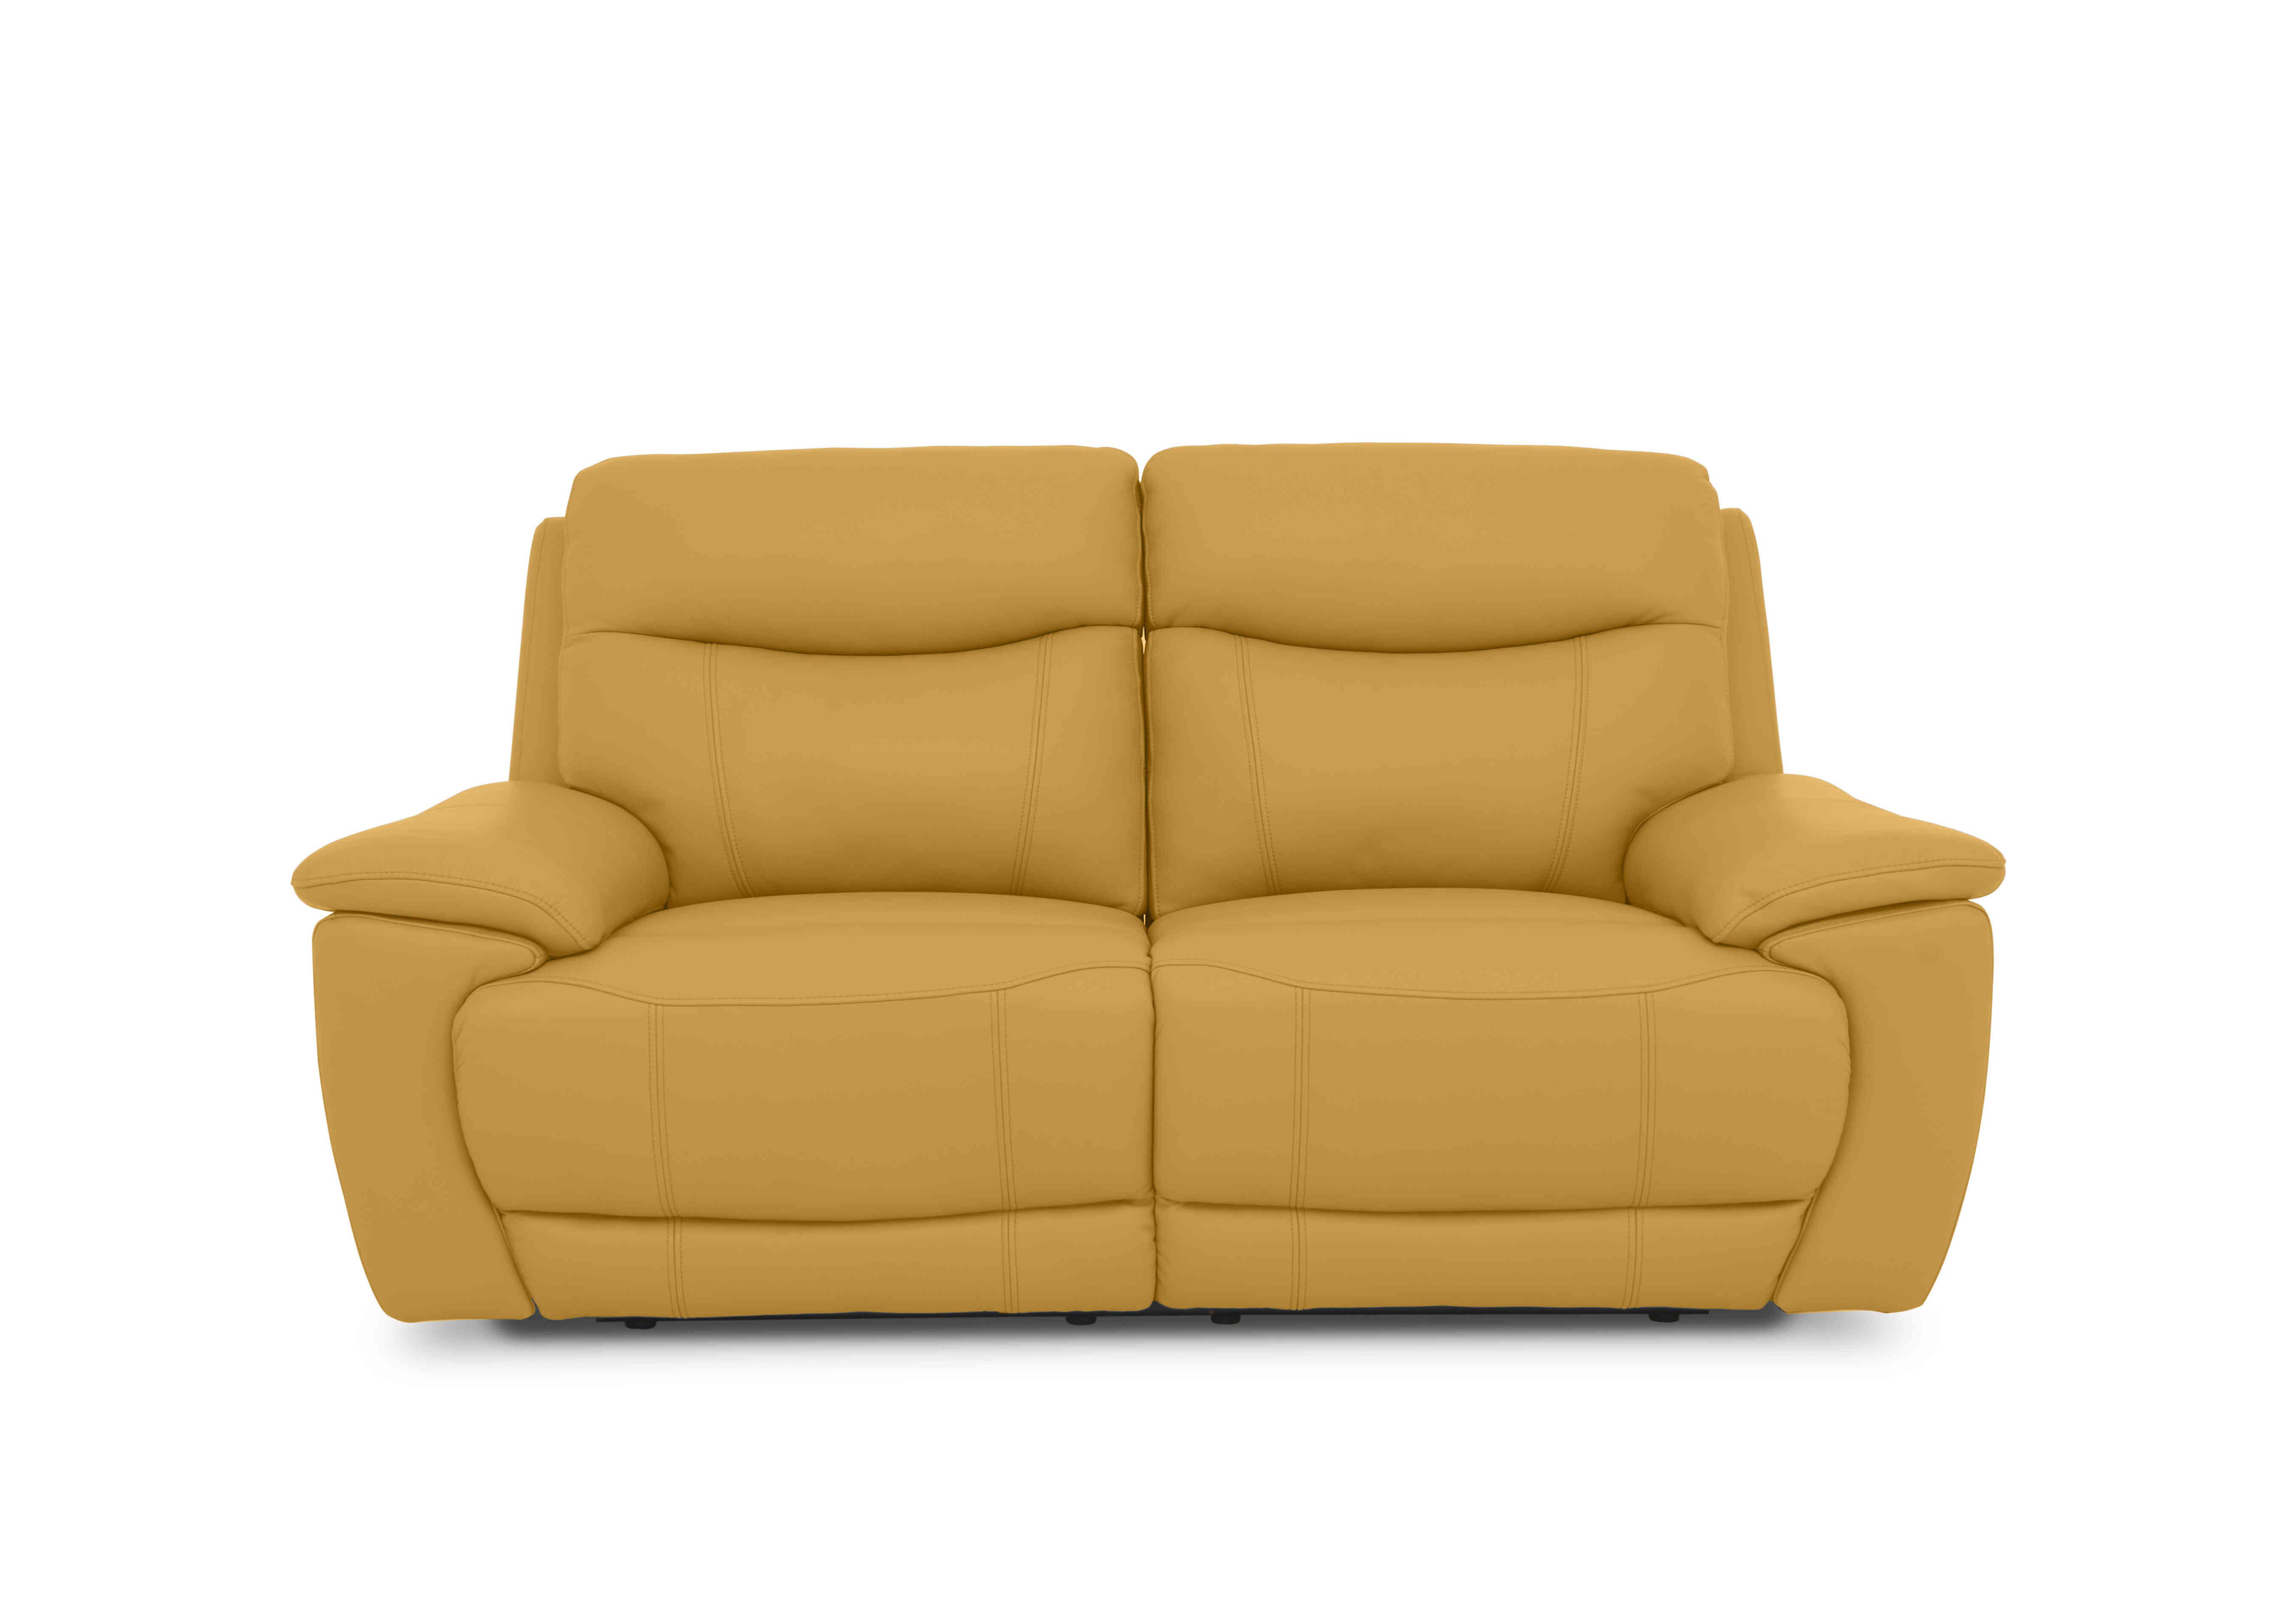 Sloane 3 Seater Leather Sofa in Cat-35/14 Florida Sunburst on Furniture Village